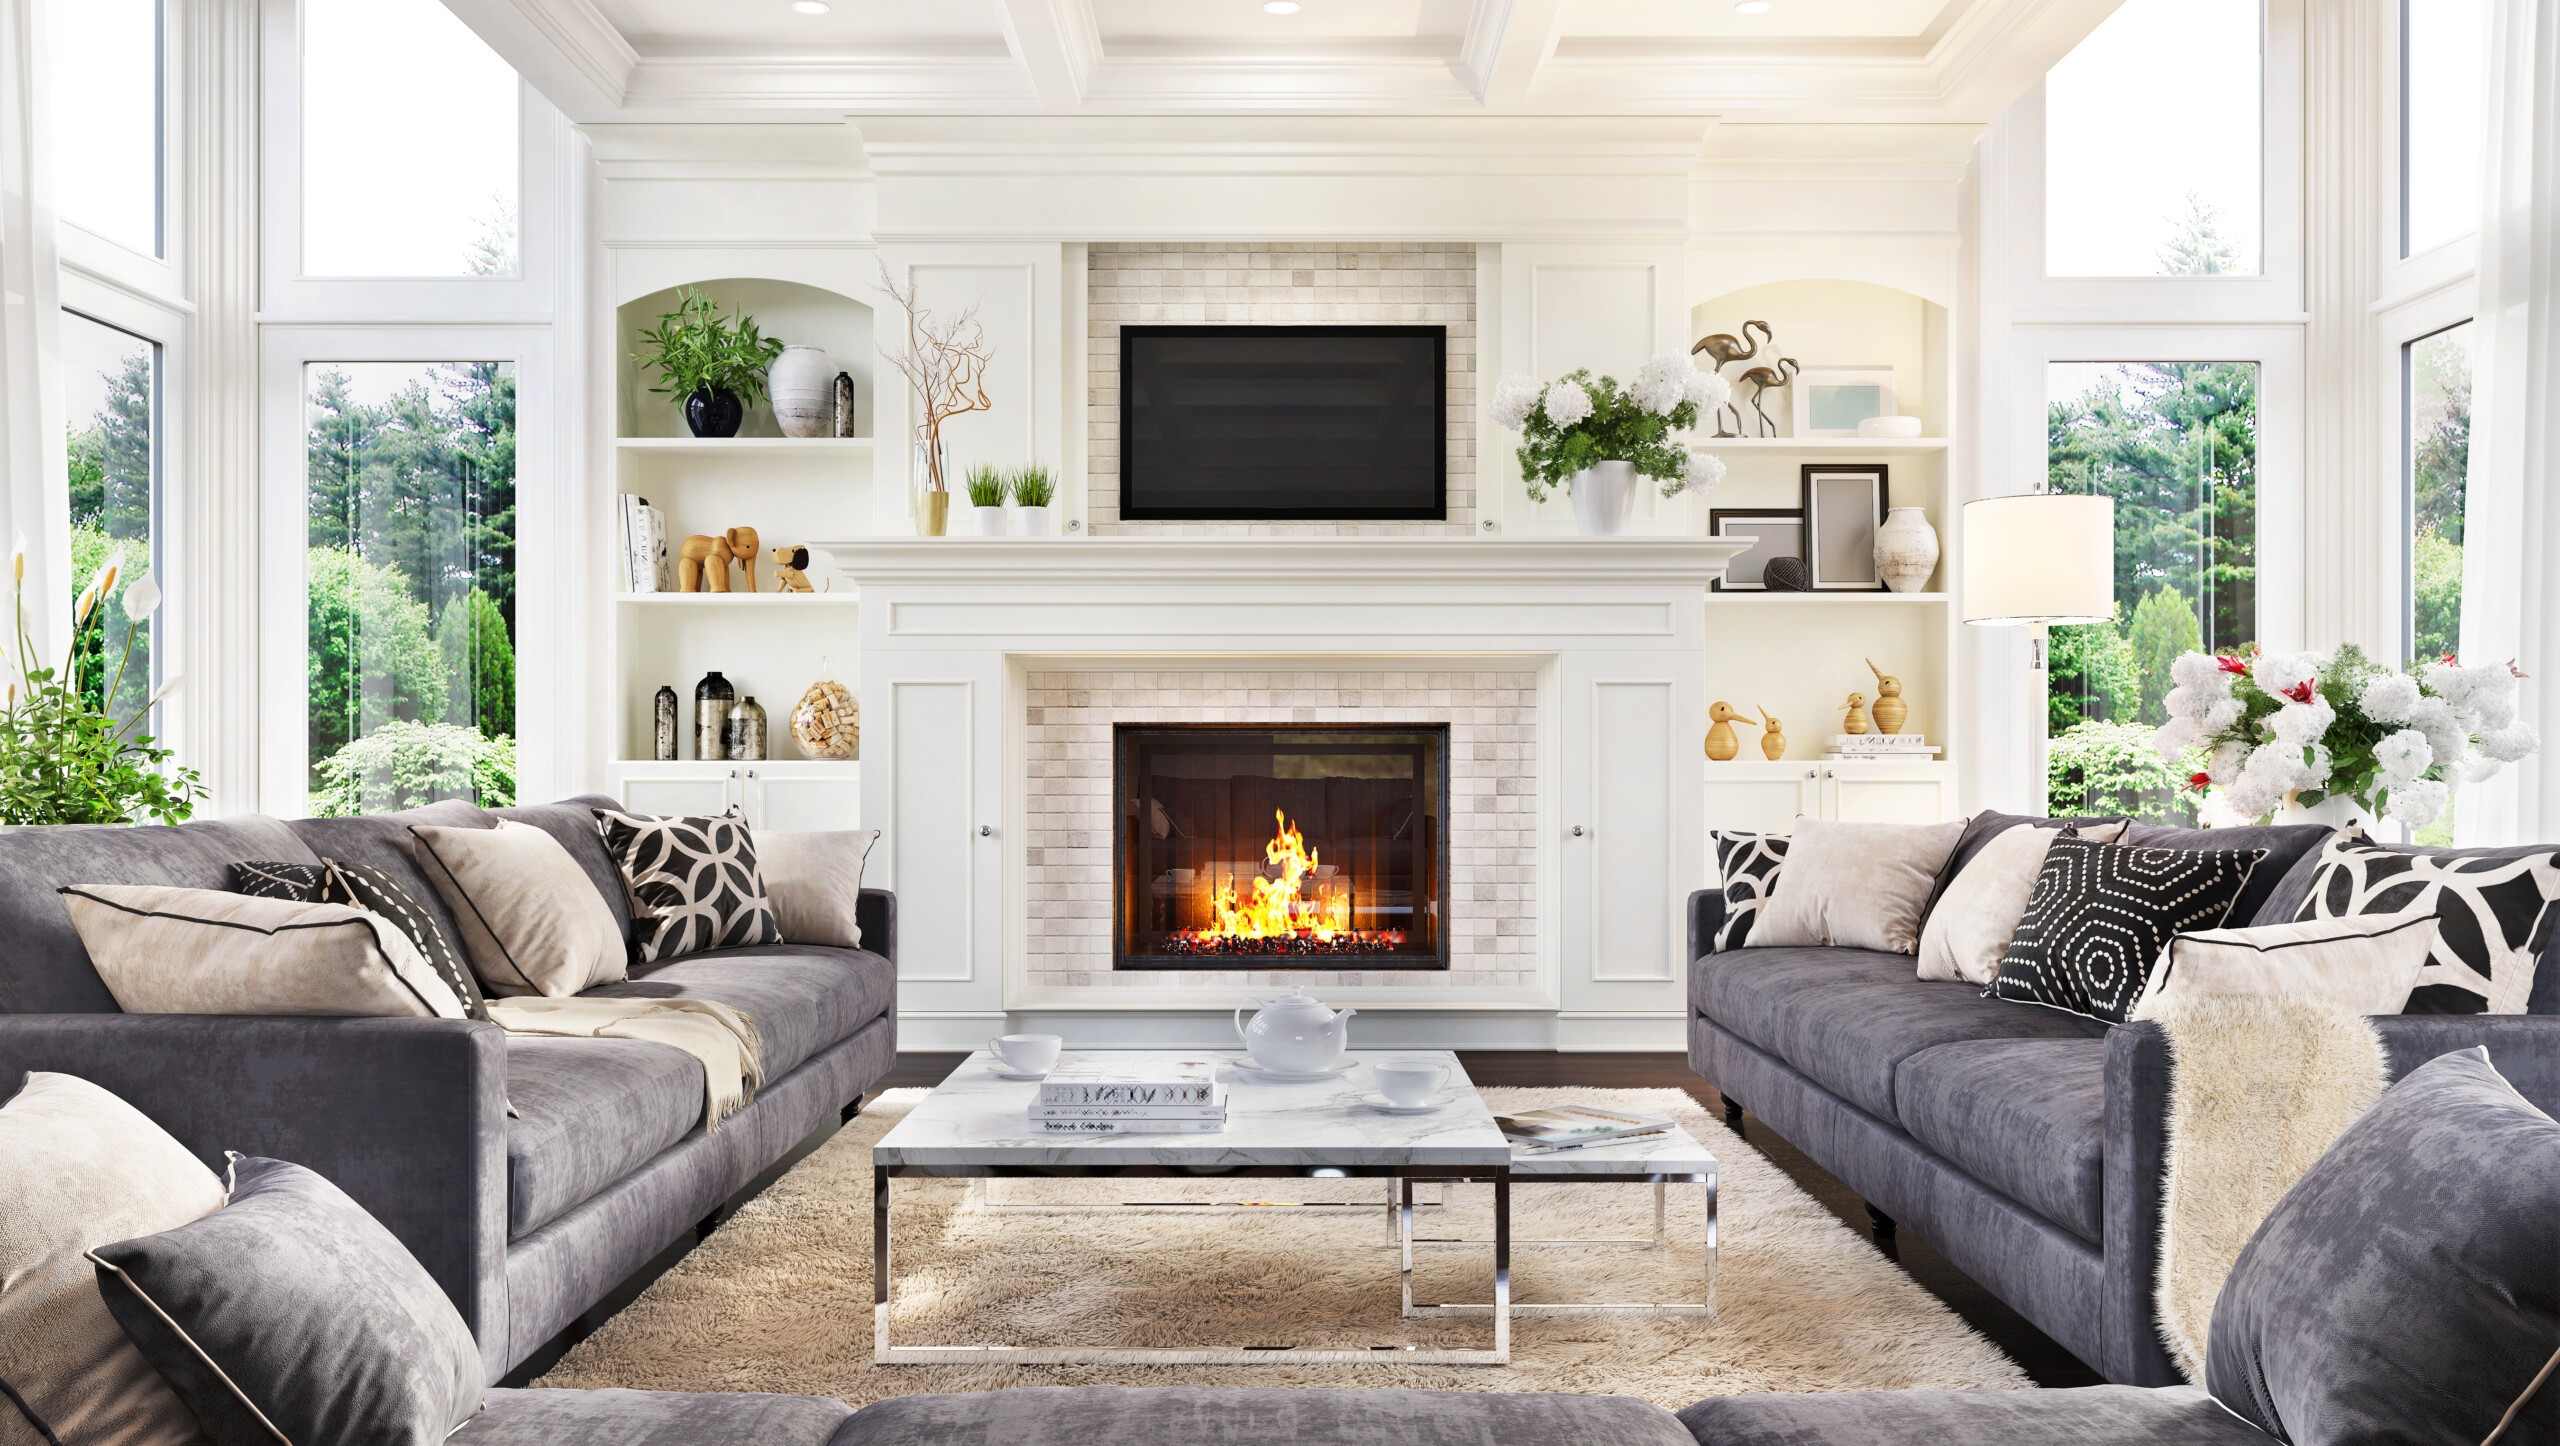 17 Classic Interior Design Styles Defined - Décor Aid